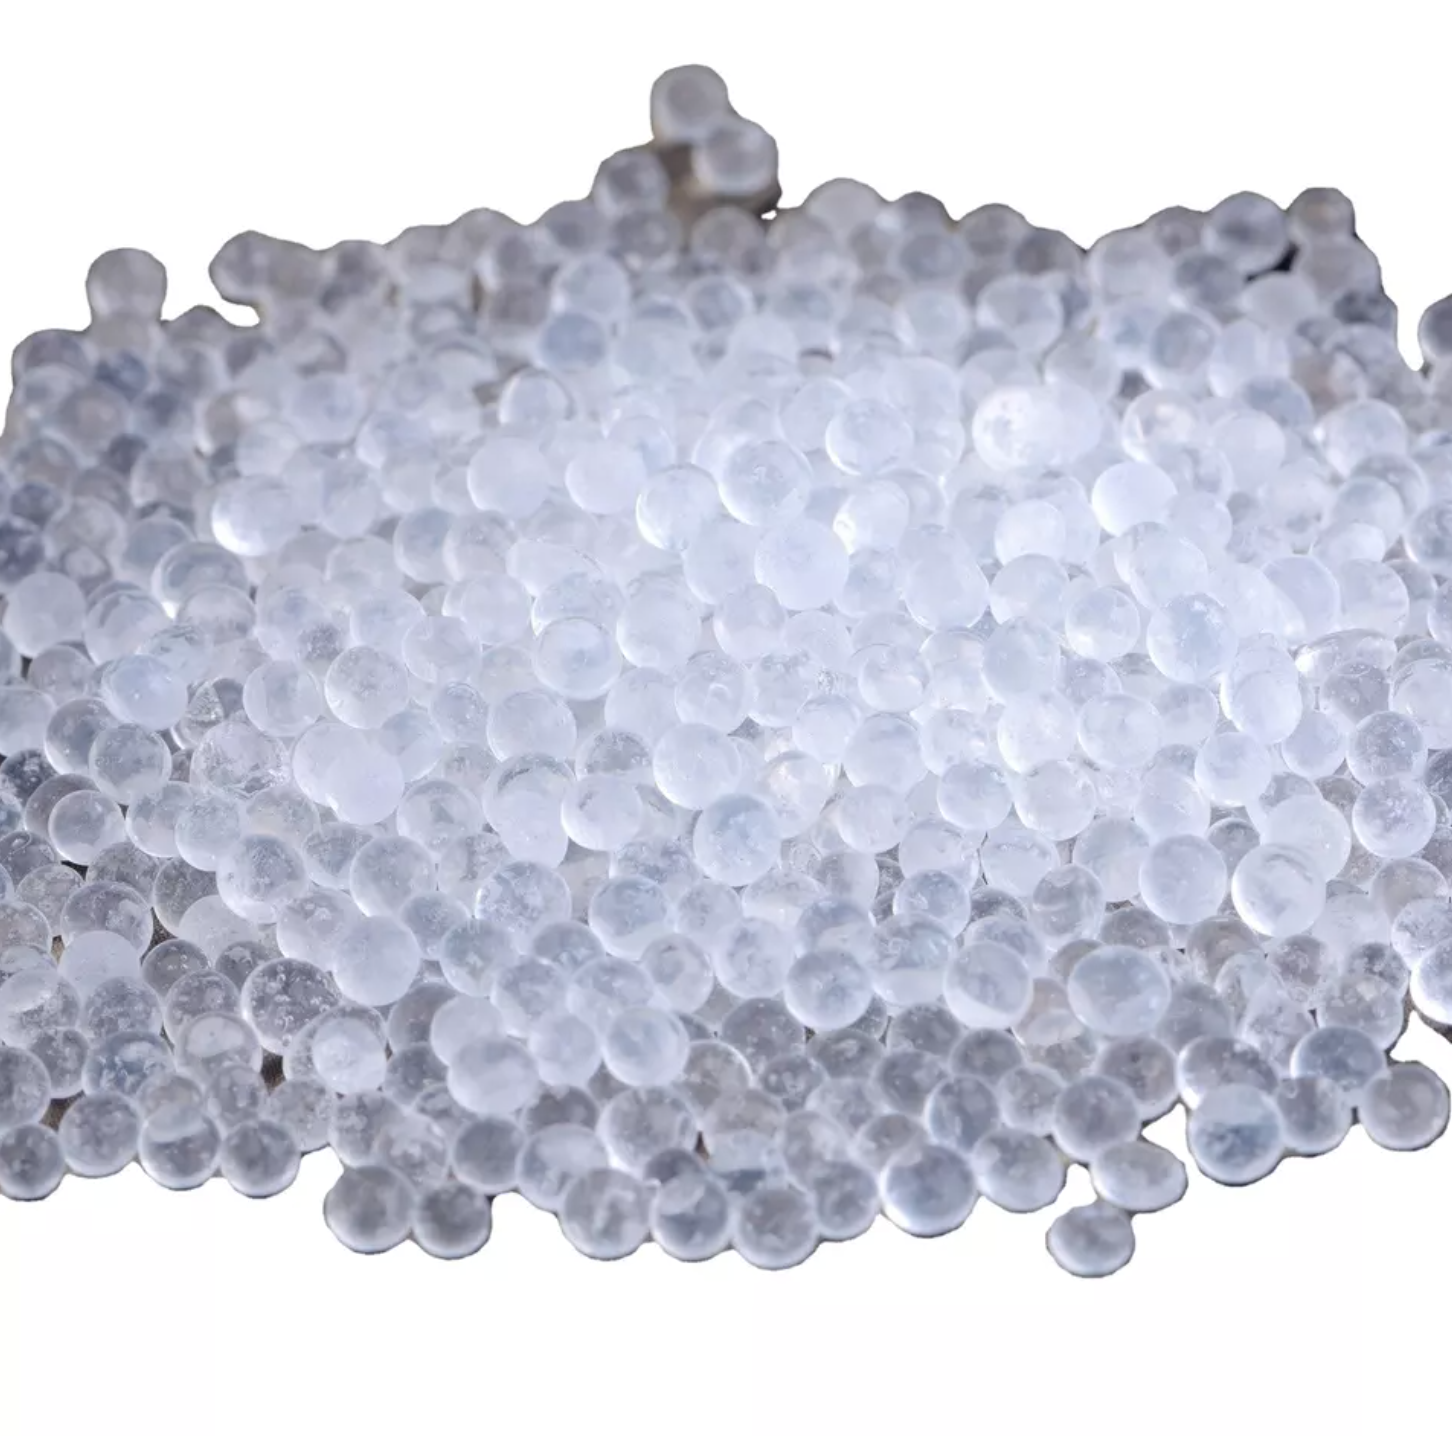 Buy Nankarrow SiliGel™ 1 kg Silica Gel Crystals for Glass Cavities